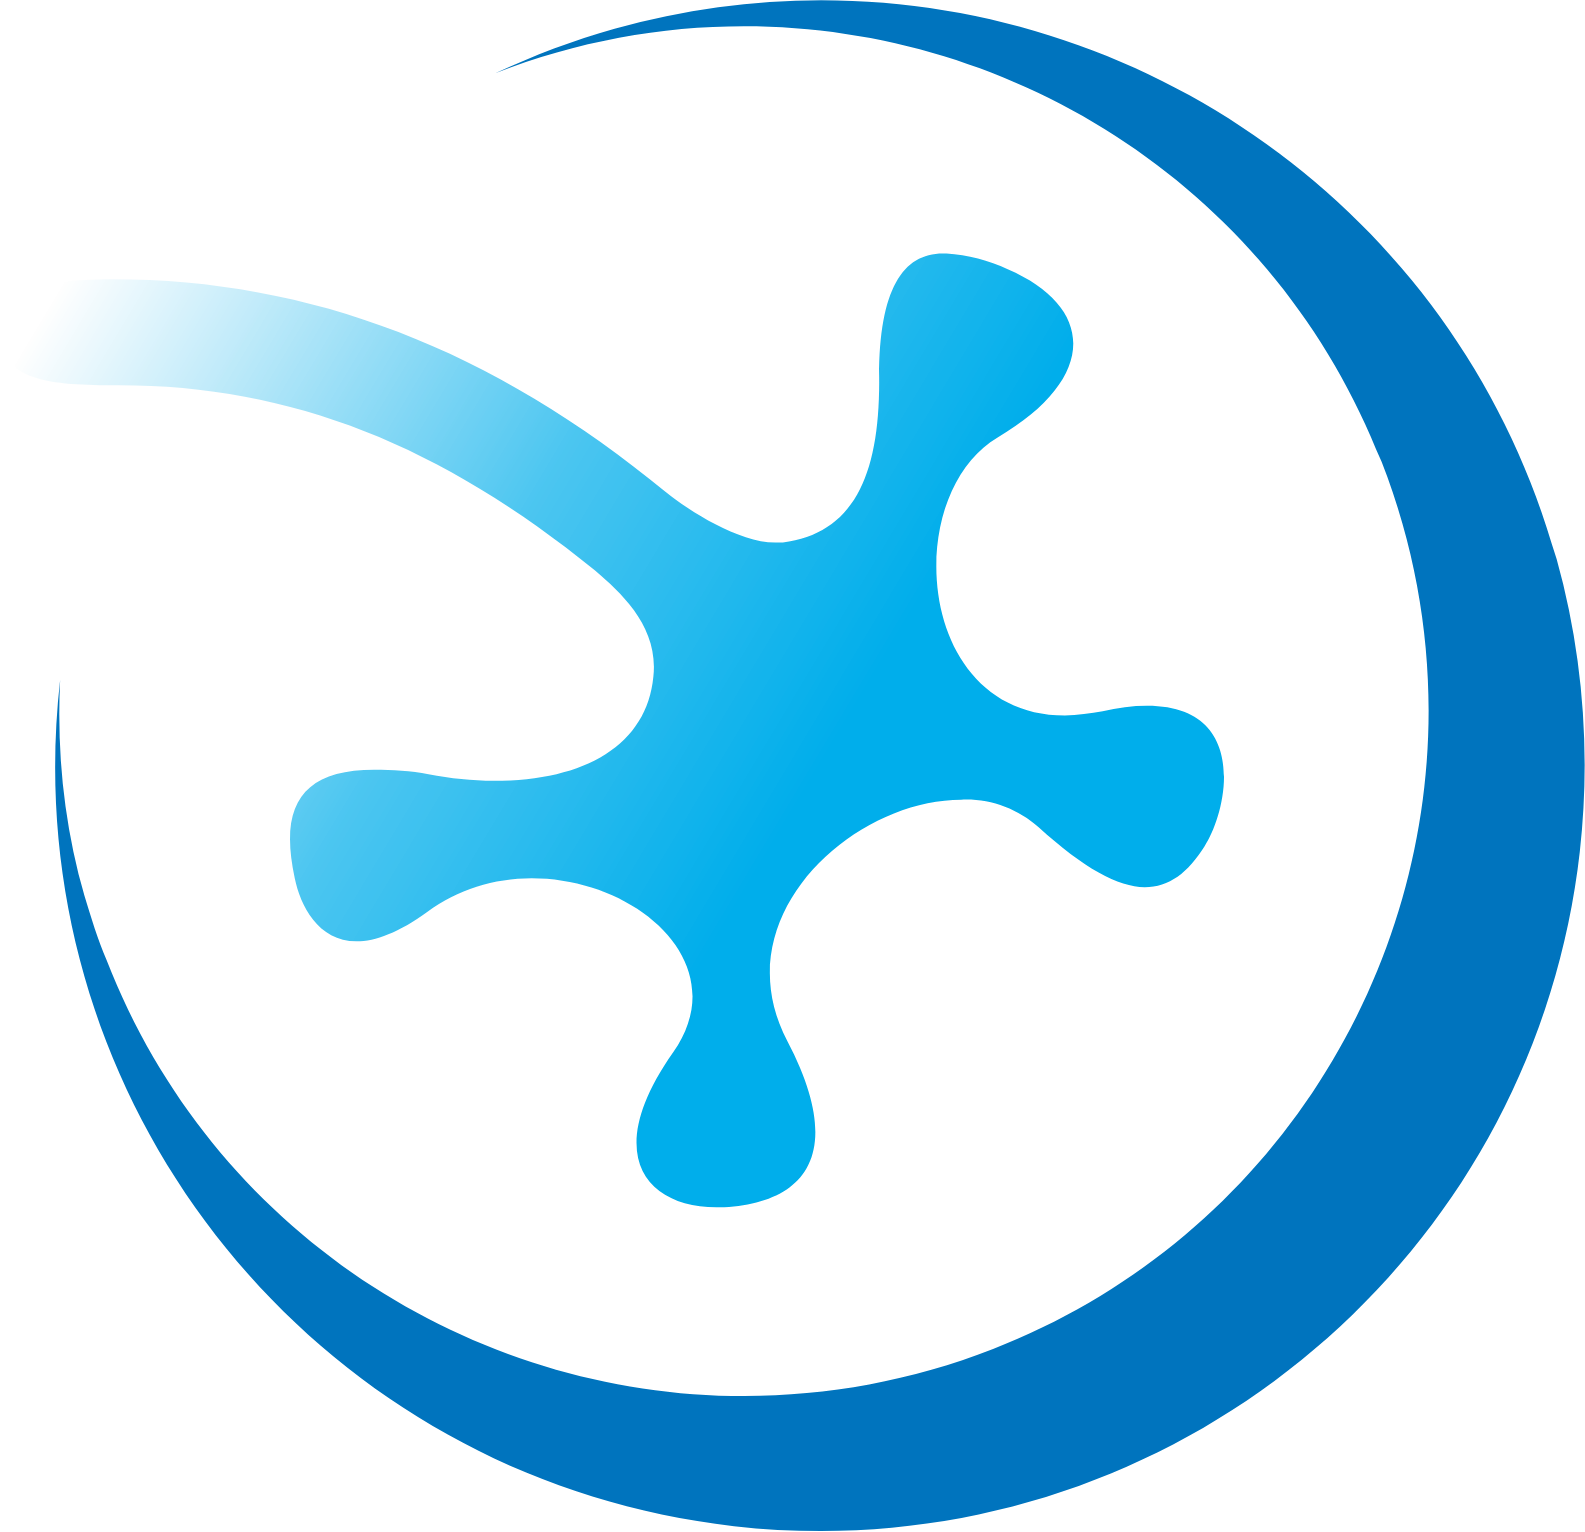 UroGen Pharma logo (PNG transparent)